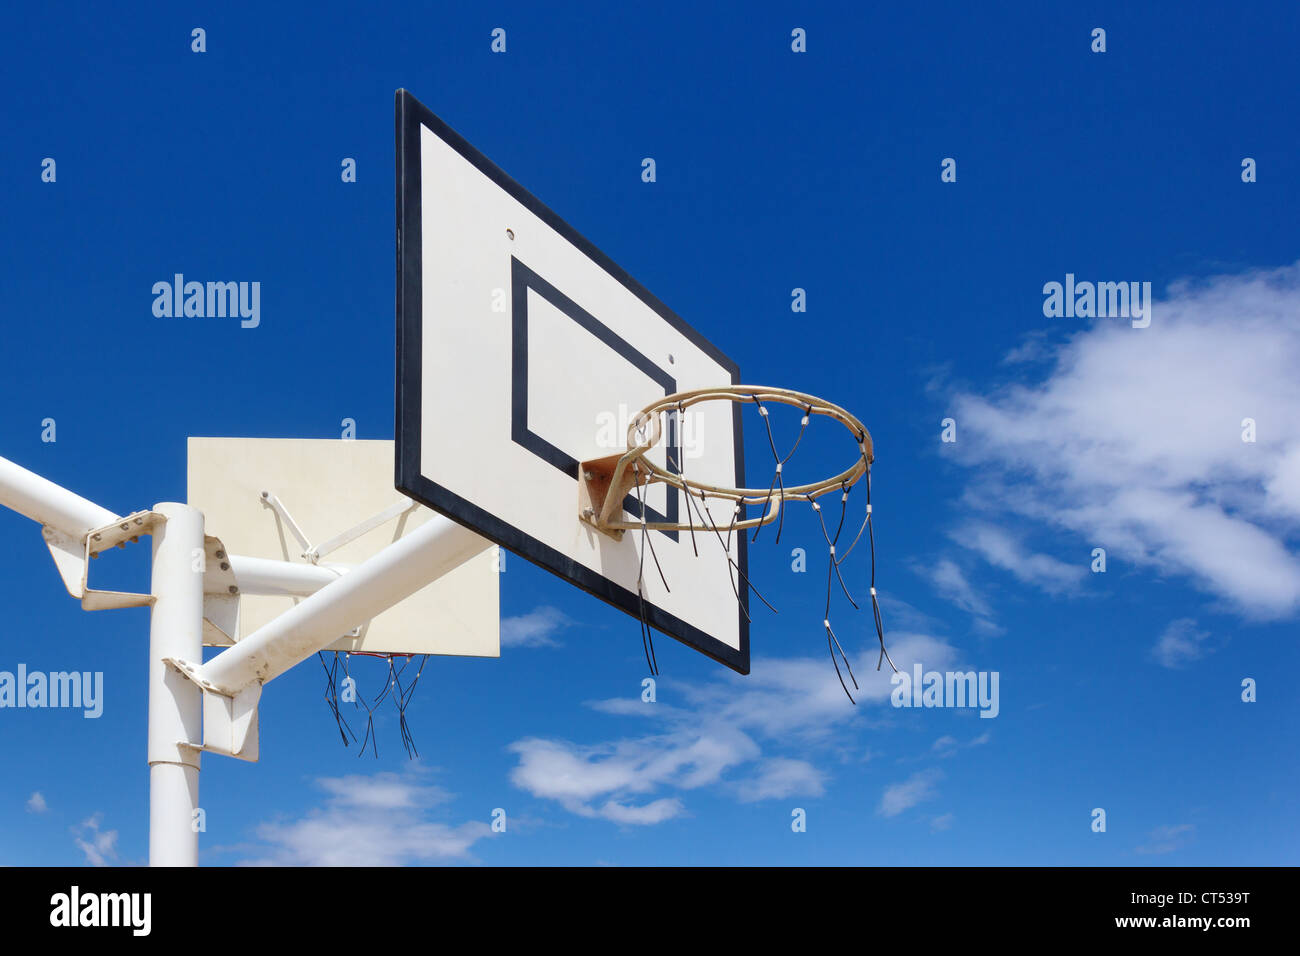 Outdoor basketball hoop under blue sky Stock Photo